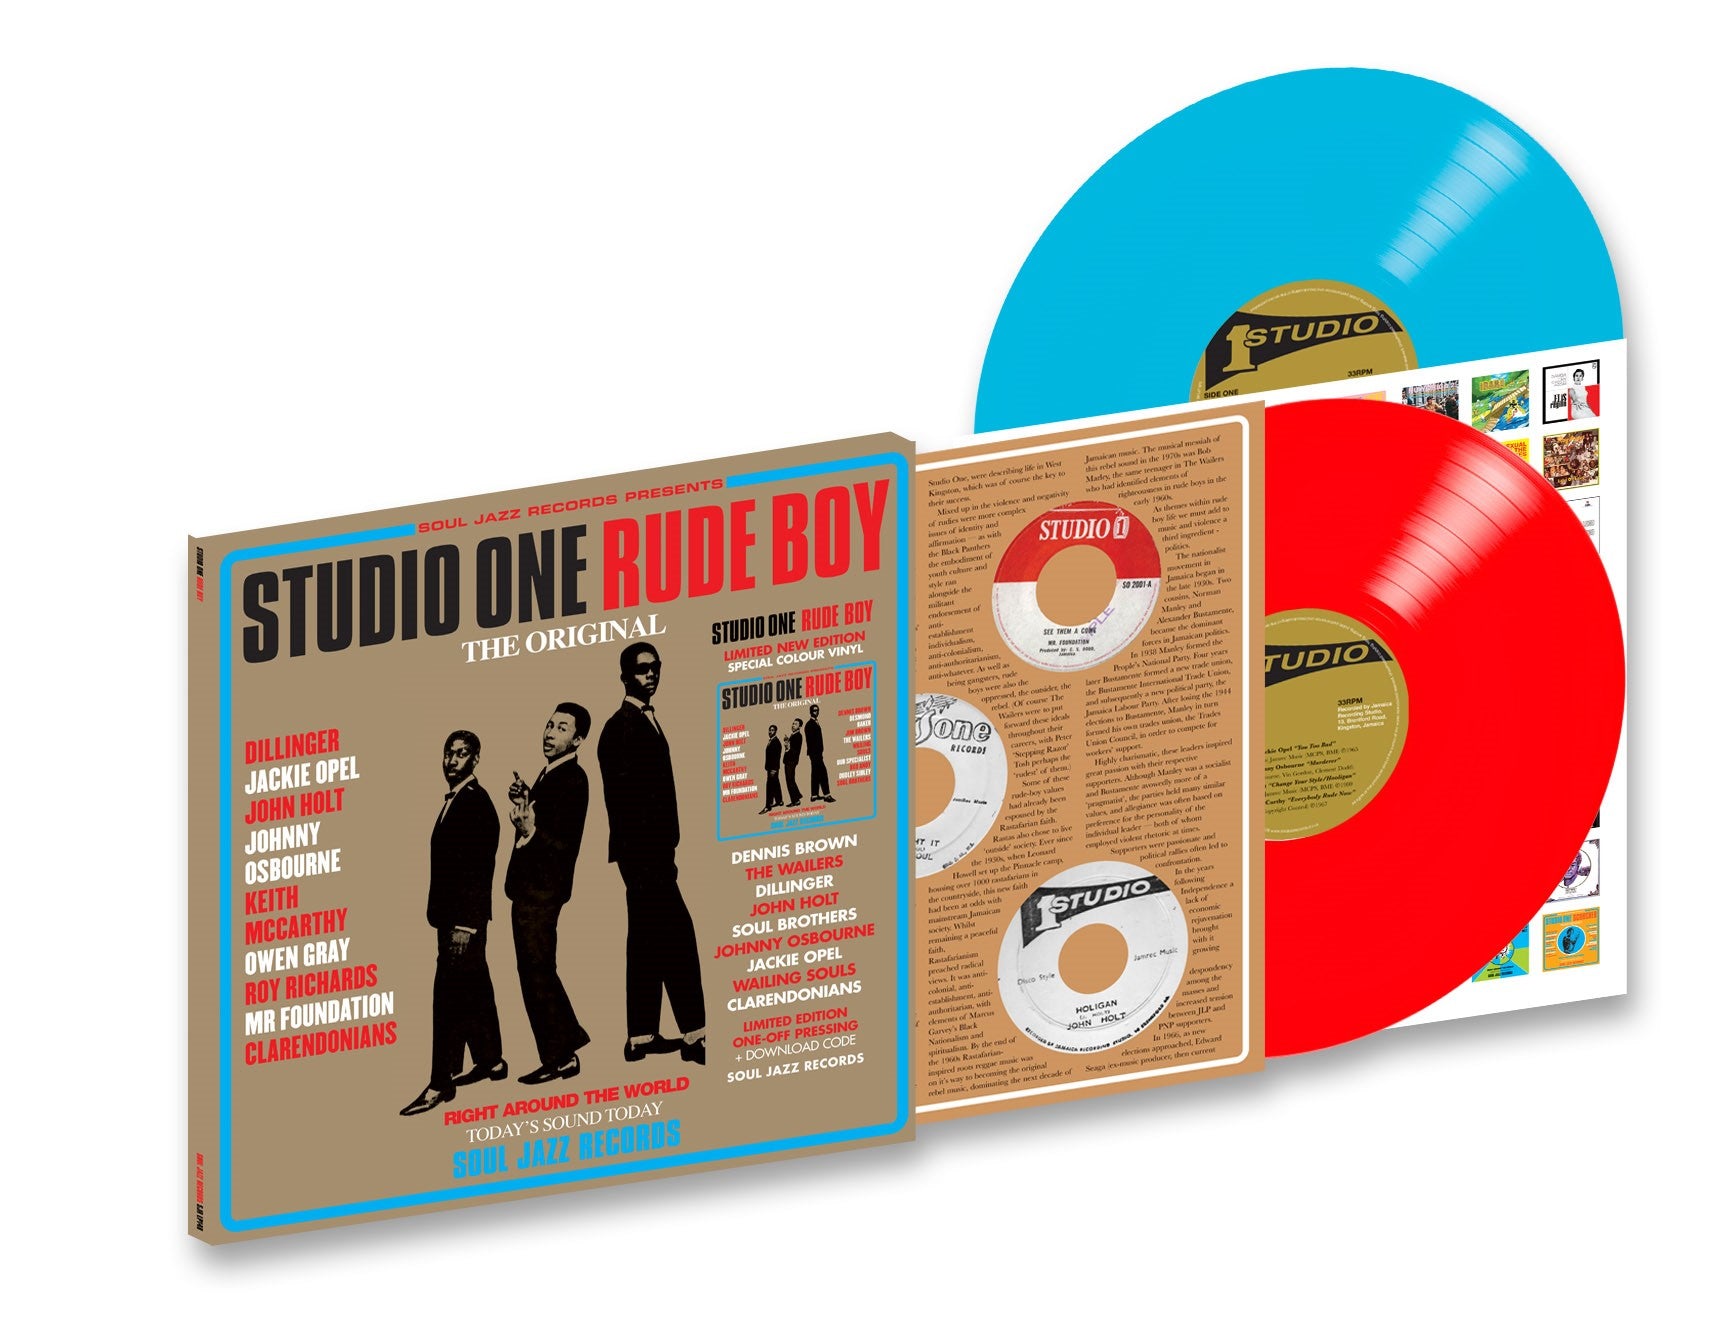 VA / SOUL JAZZ RECORDS PRESENTS - Studio One Rude Boy - 2 LP - Red and Cyan Vinyl  [RSD 2024]